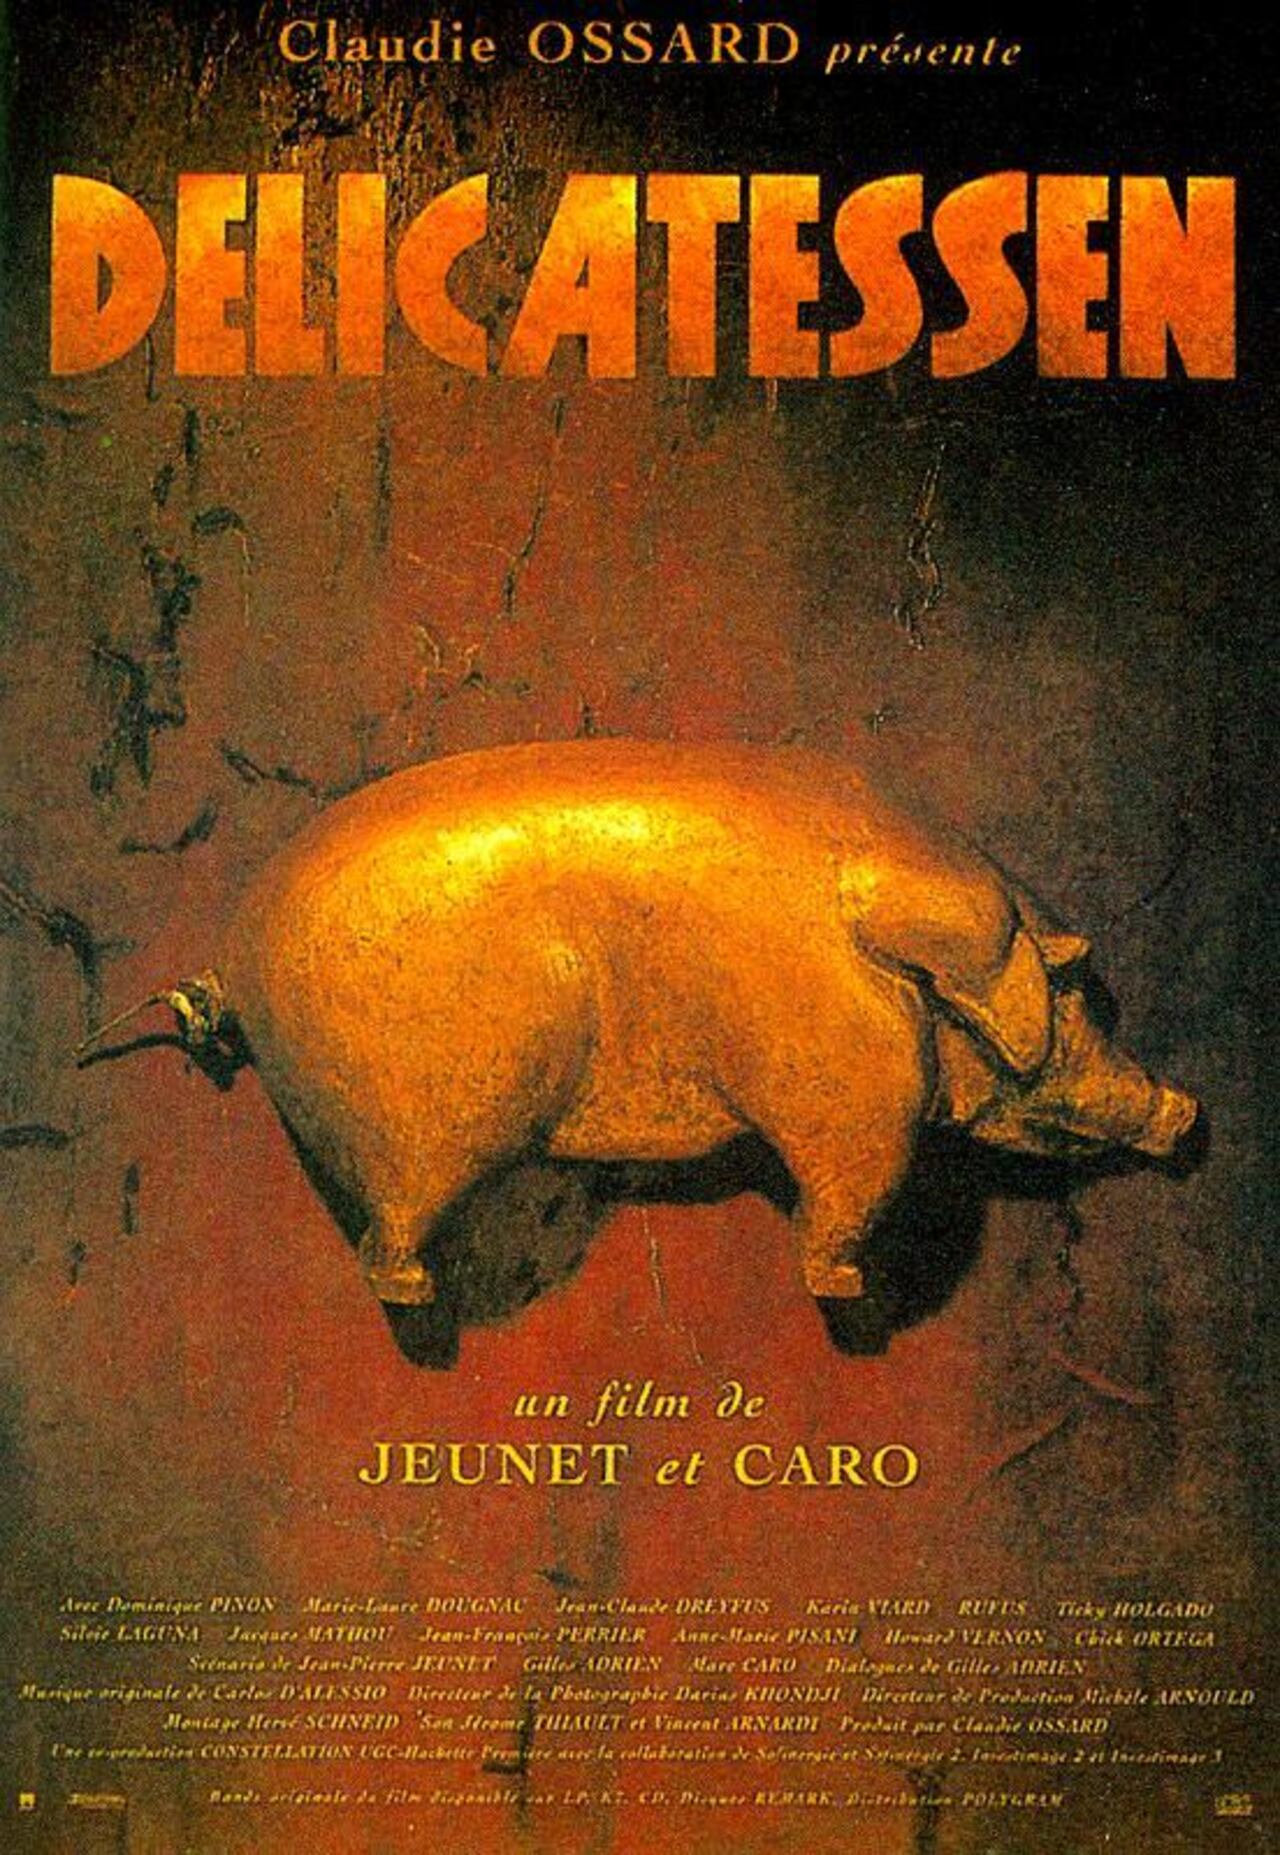 Delicatessen, dirigida por Jean-Pierre Jeunet